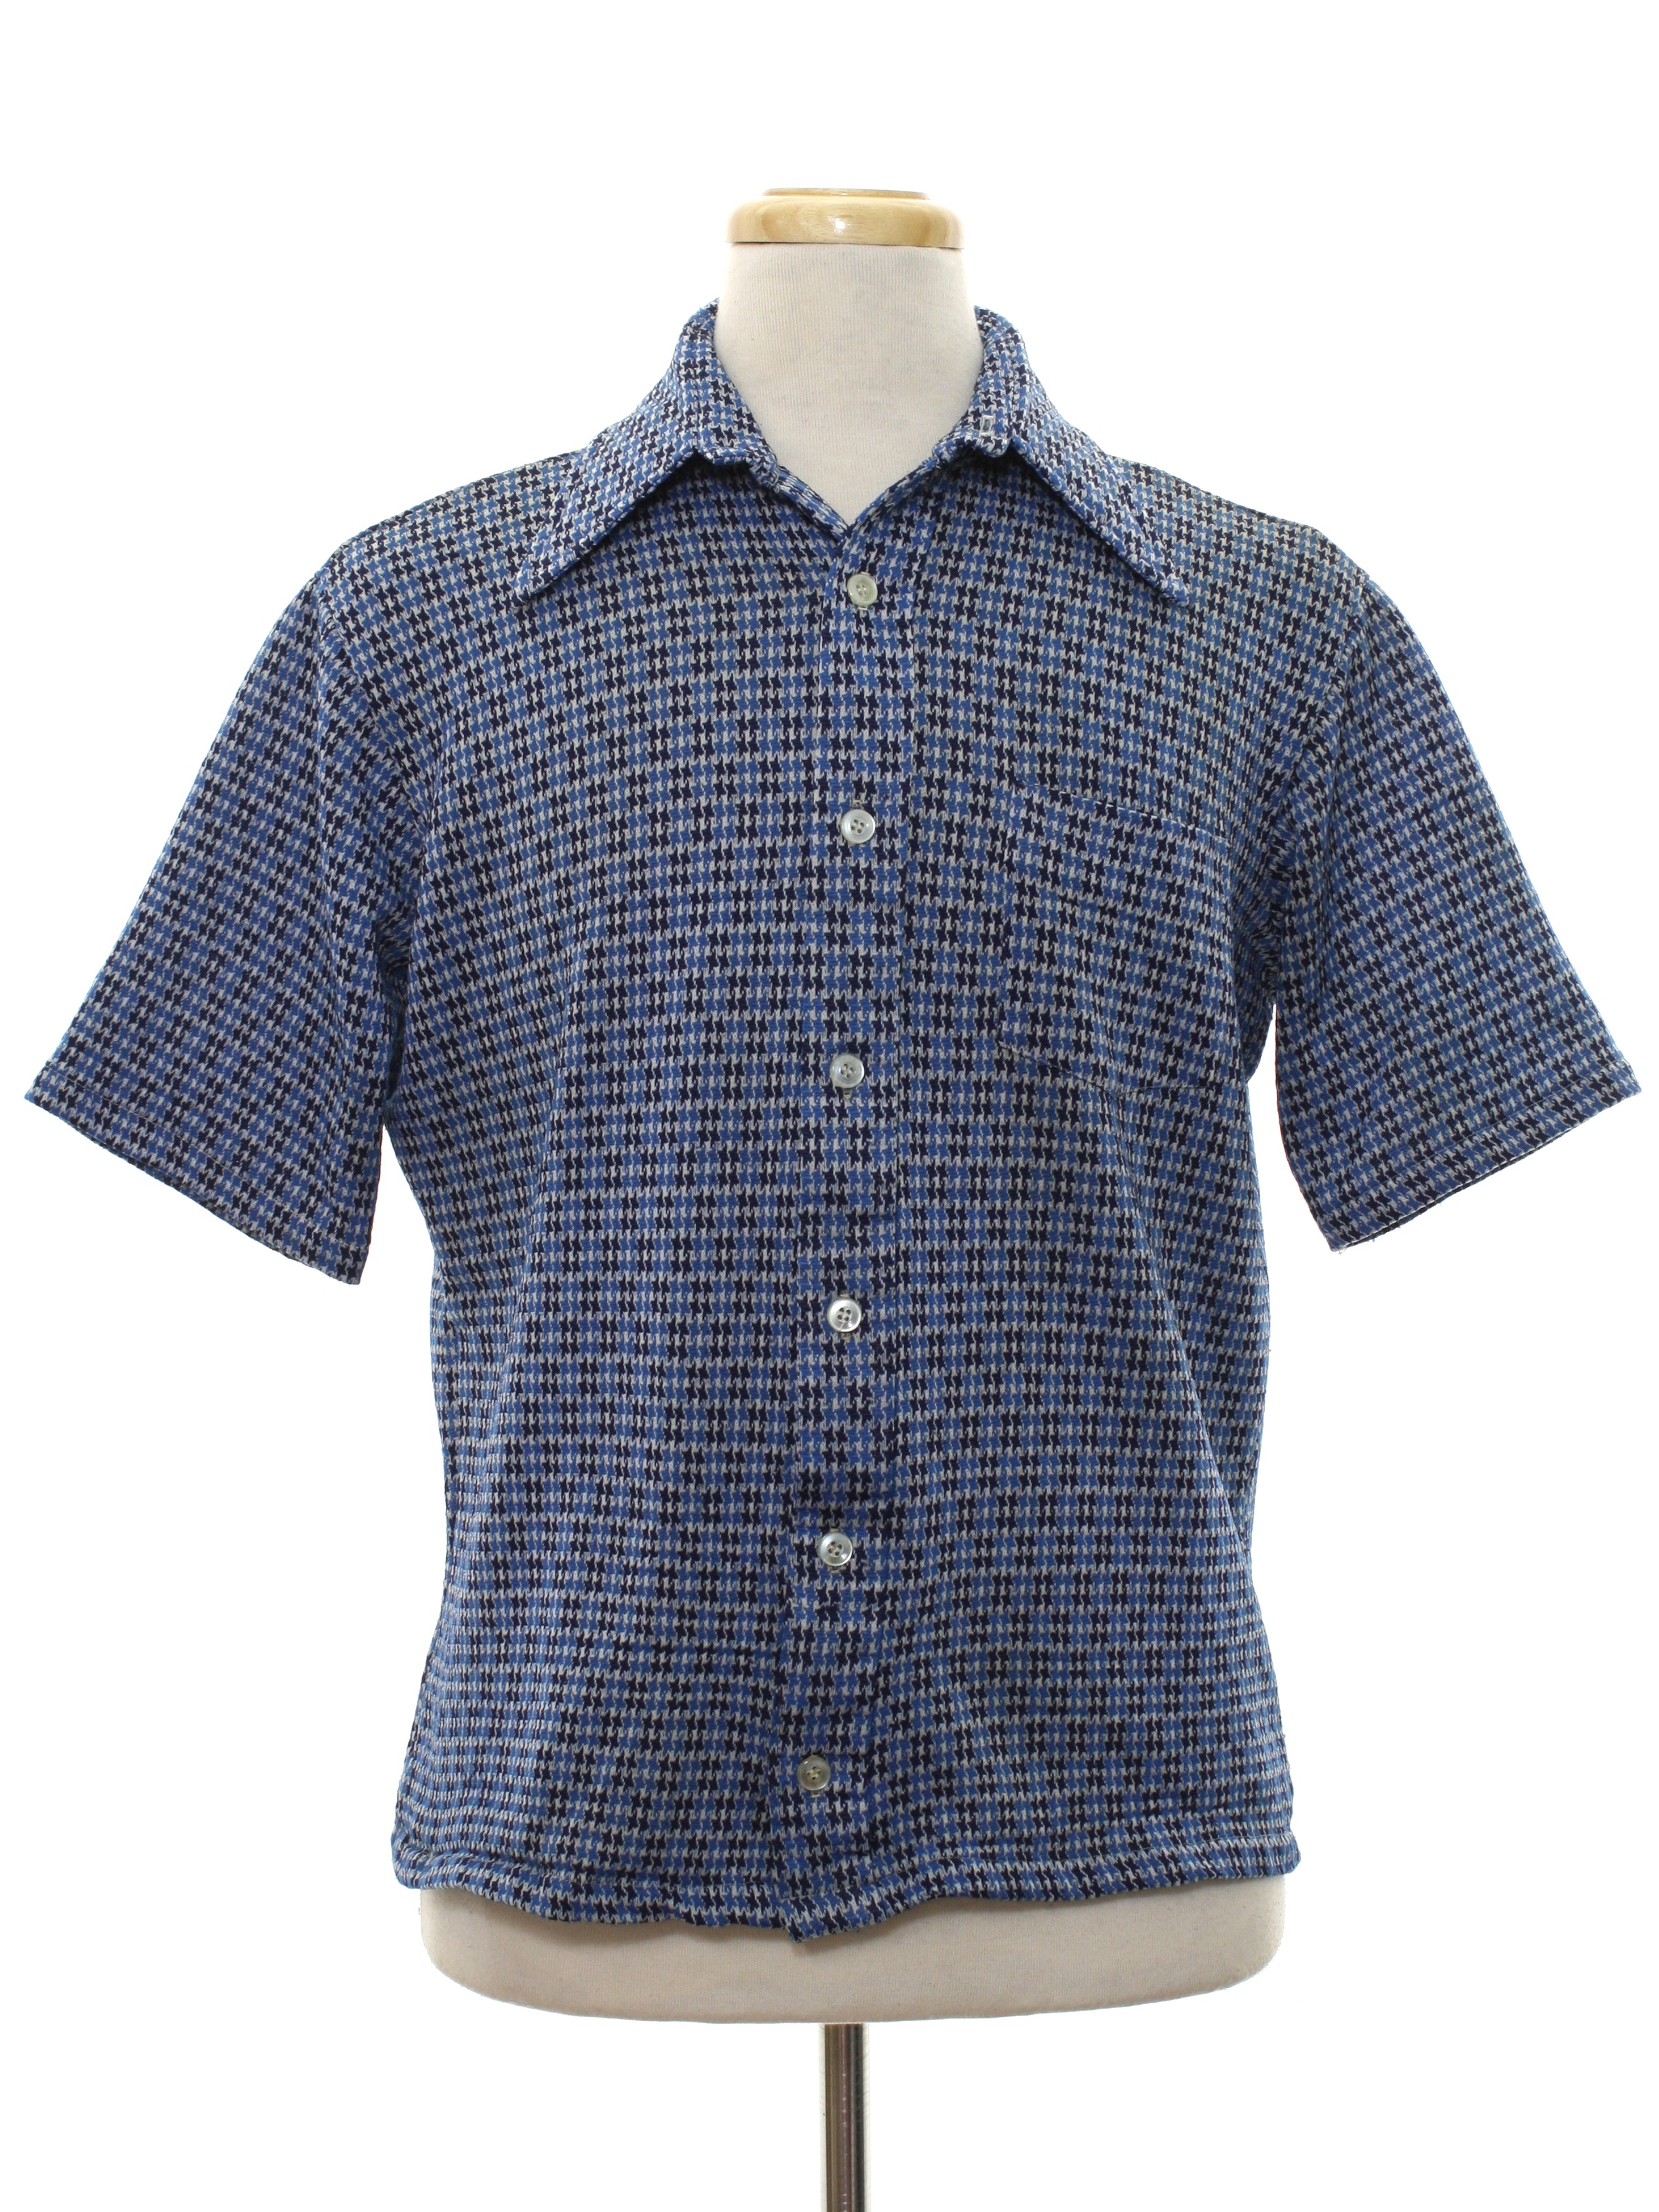 Seventies JC Penny Shirt: 70s -JC Penny- Mens deep sky blue background ...